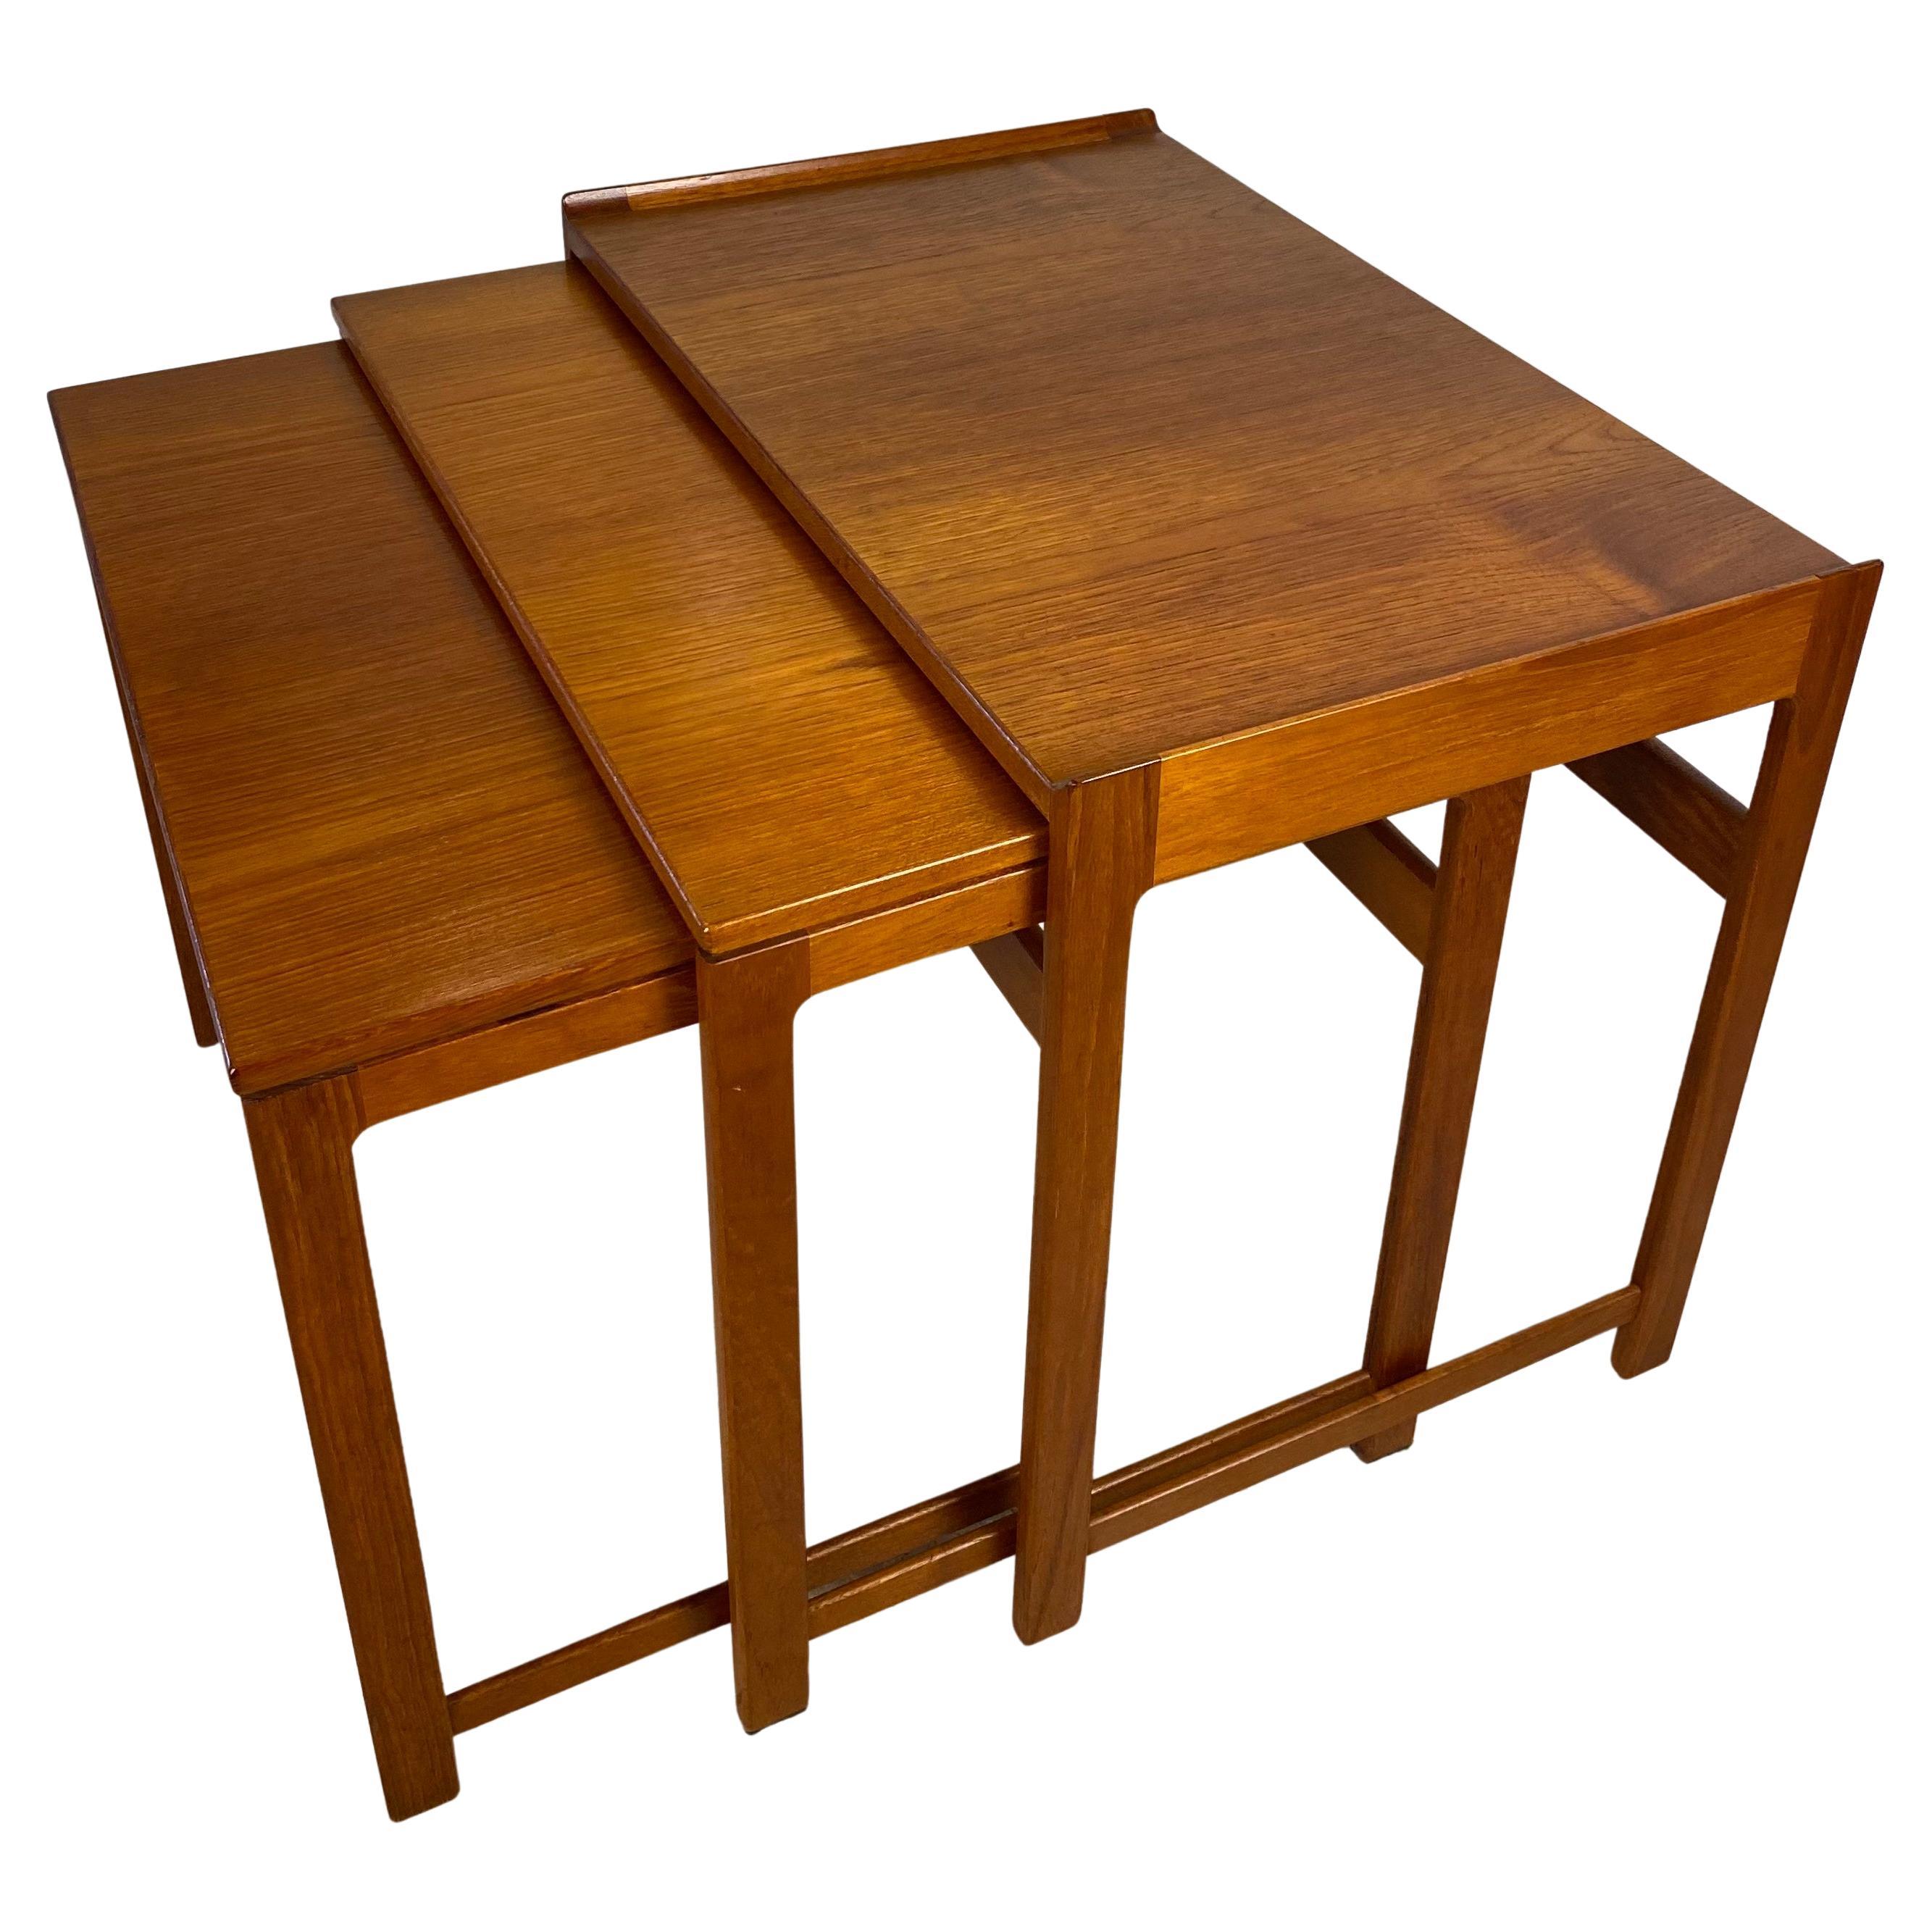 3 Mid-Century Wooden Nesting Tables or Gigogne End Tables Hans J. Wegner Style For Sale